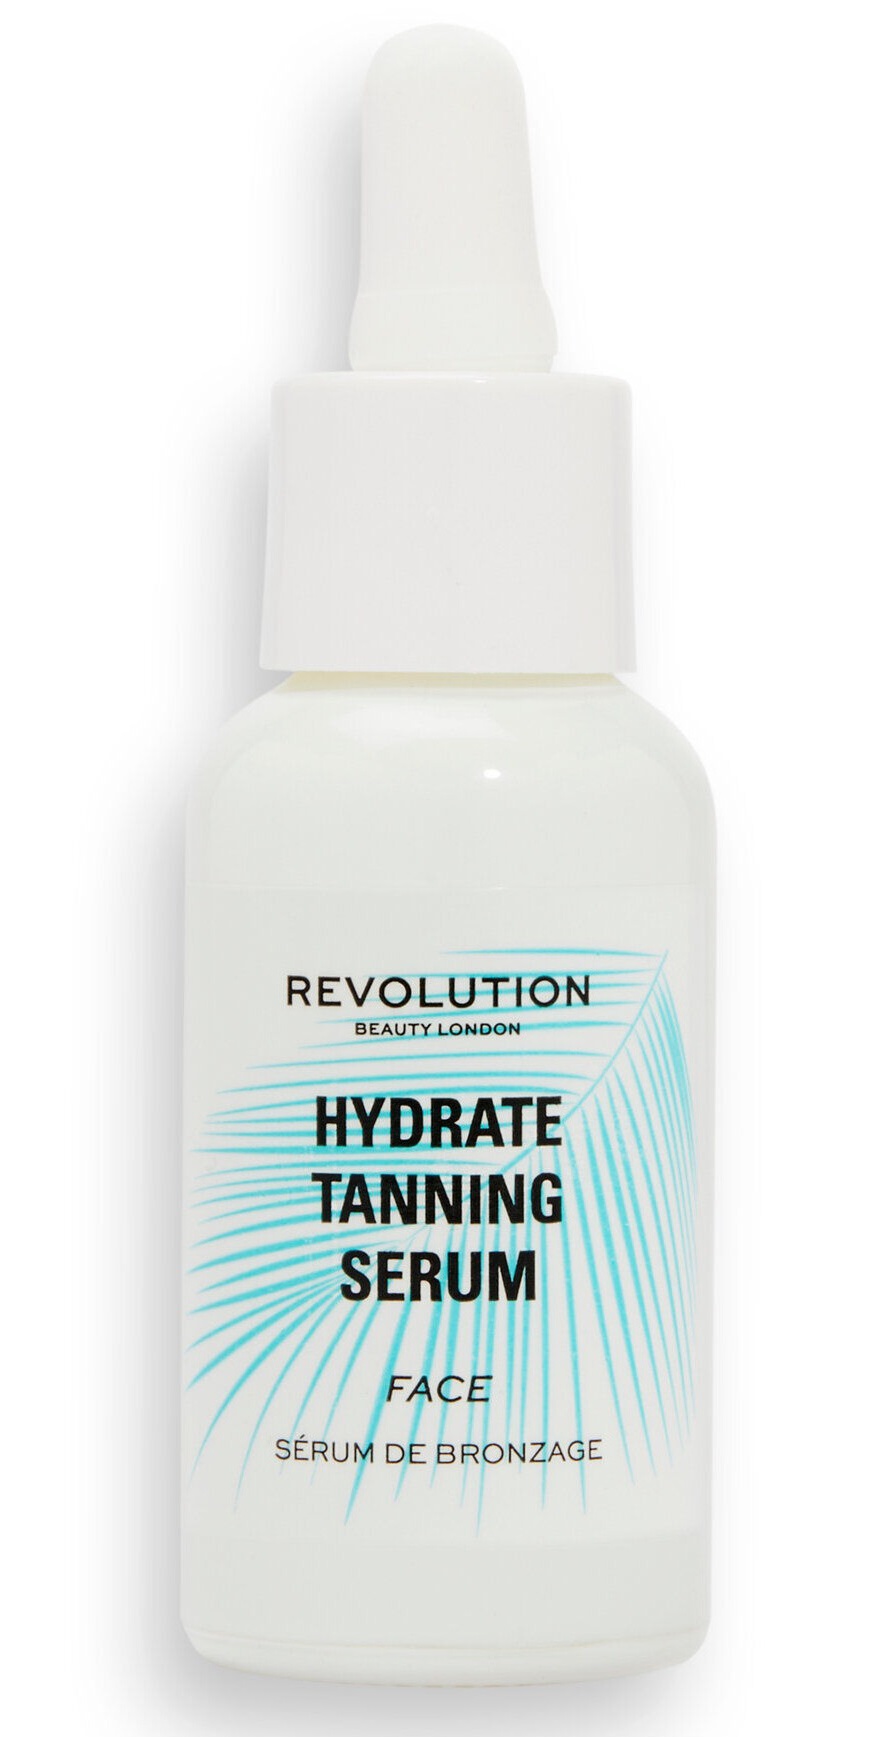 Revolution Hydrate Tanning Serum